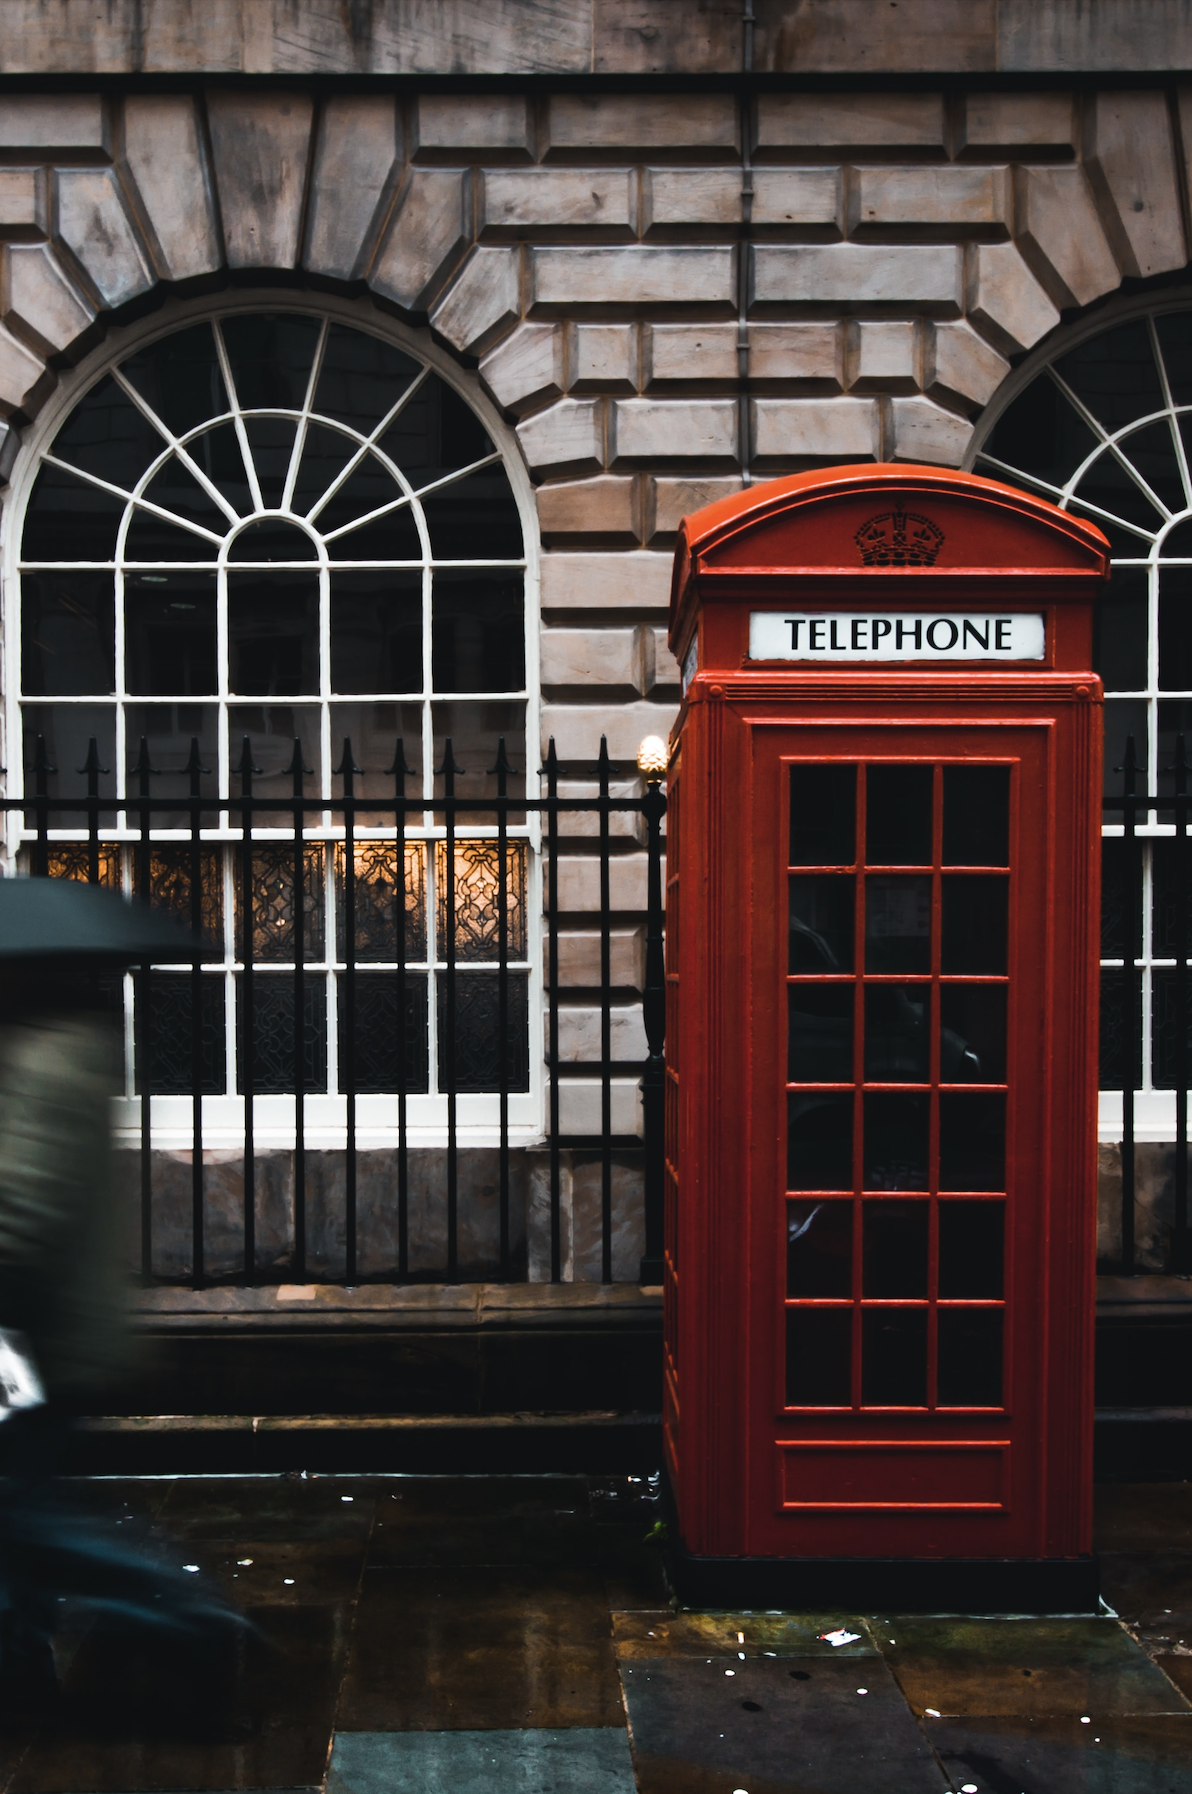 hire strategic communications staff - image of london telephone box